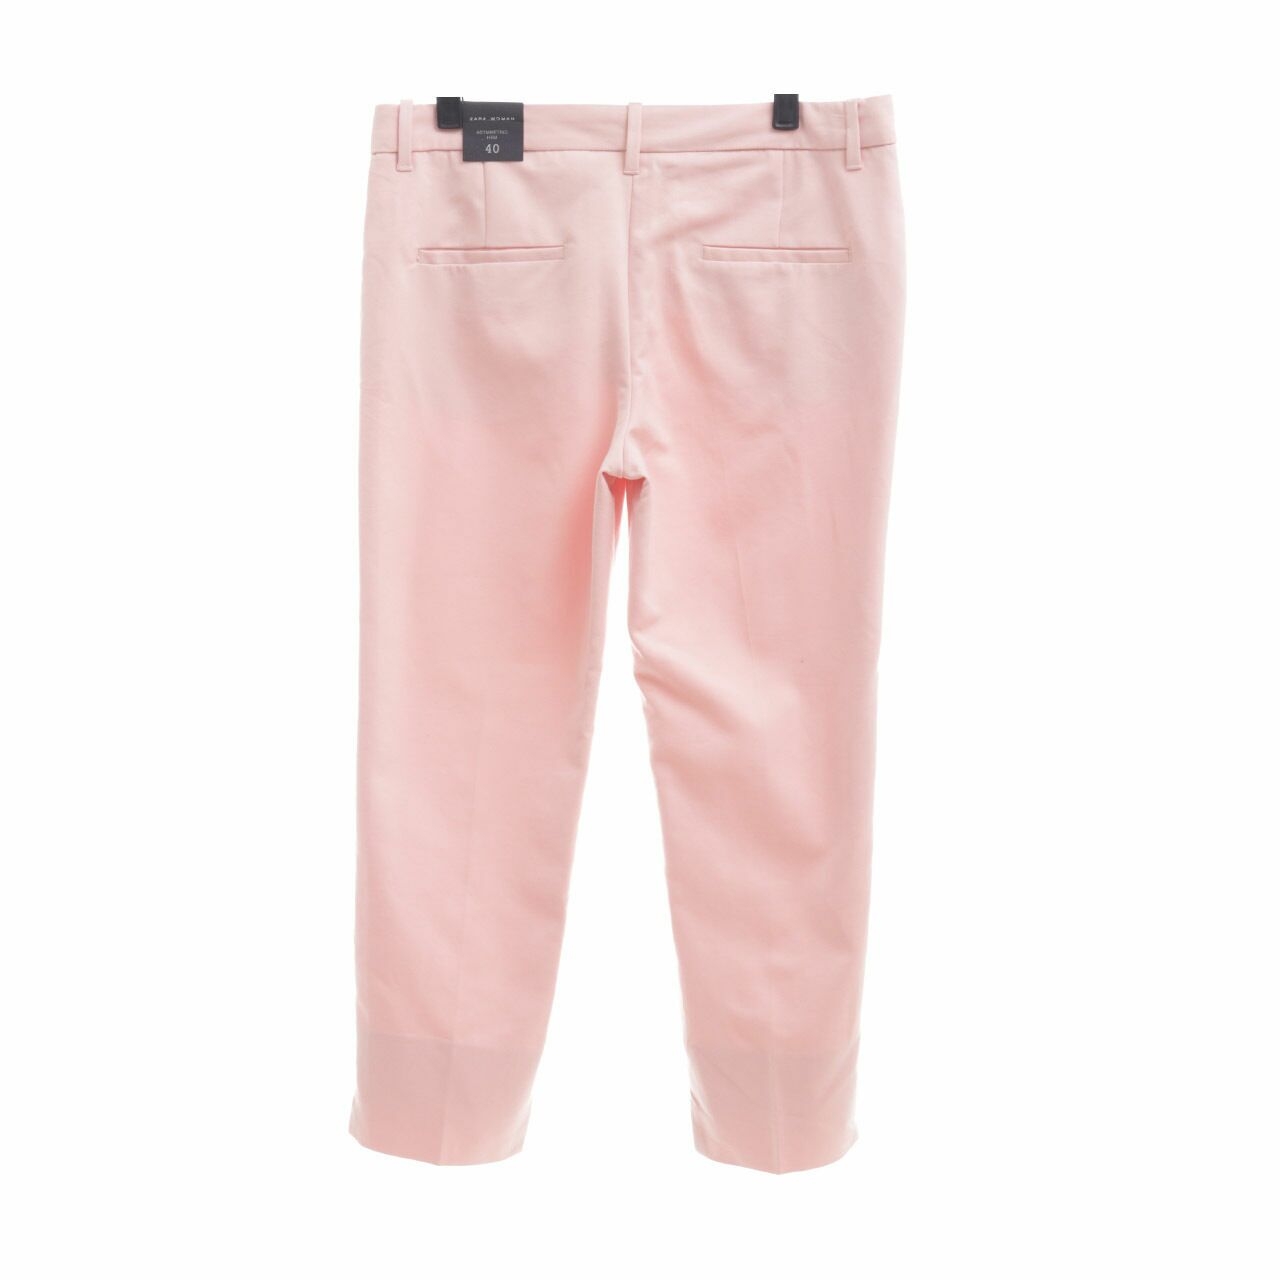 Zara Pink Long Pants